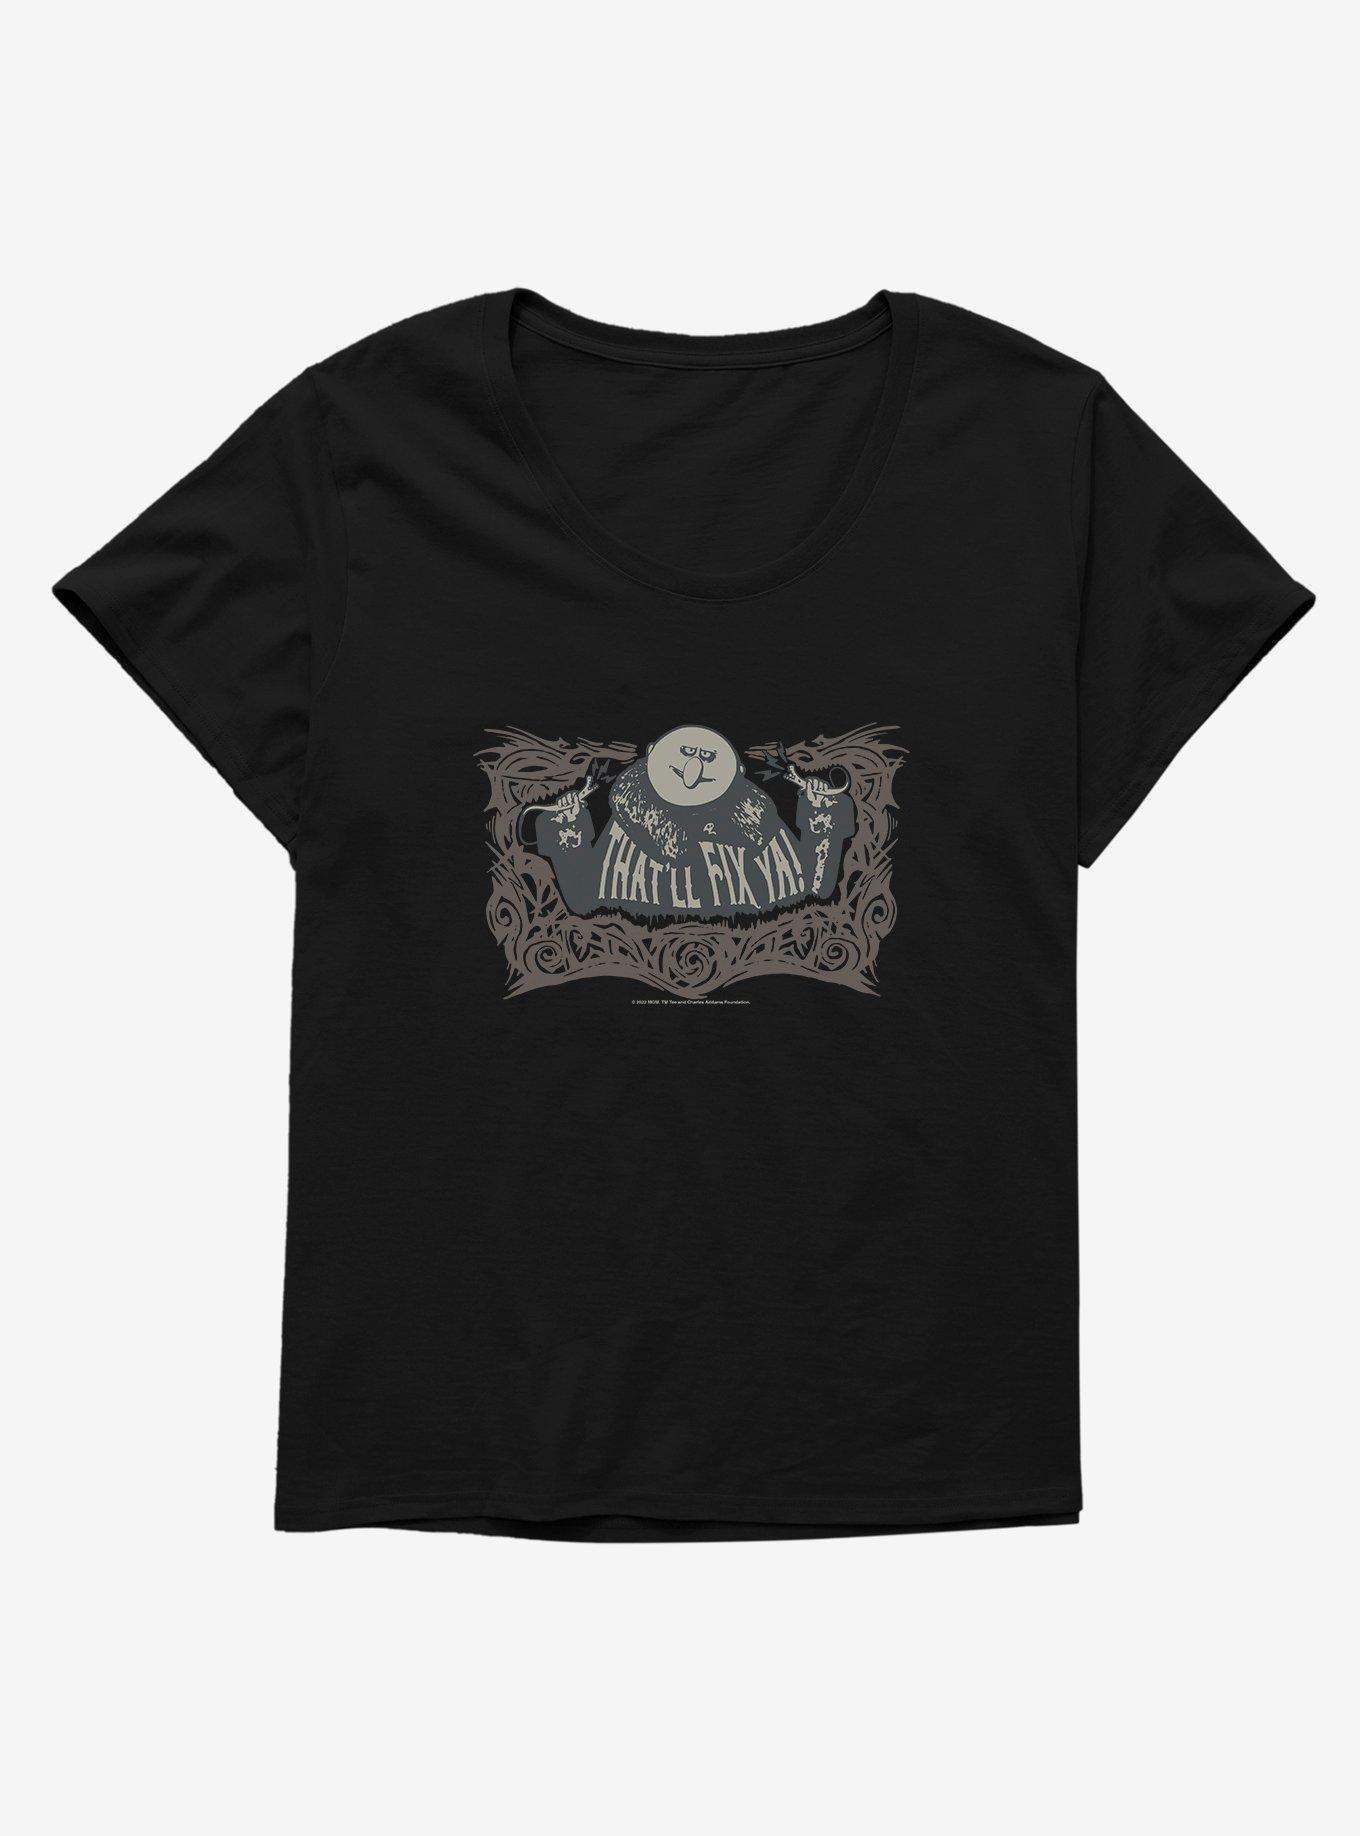 Addams Family That'll Fix Ya! Girls T-Shirt Plus Size, BLACK, hi-res